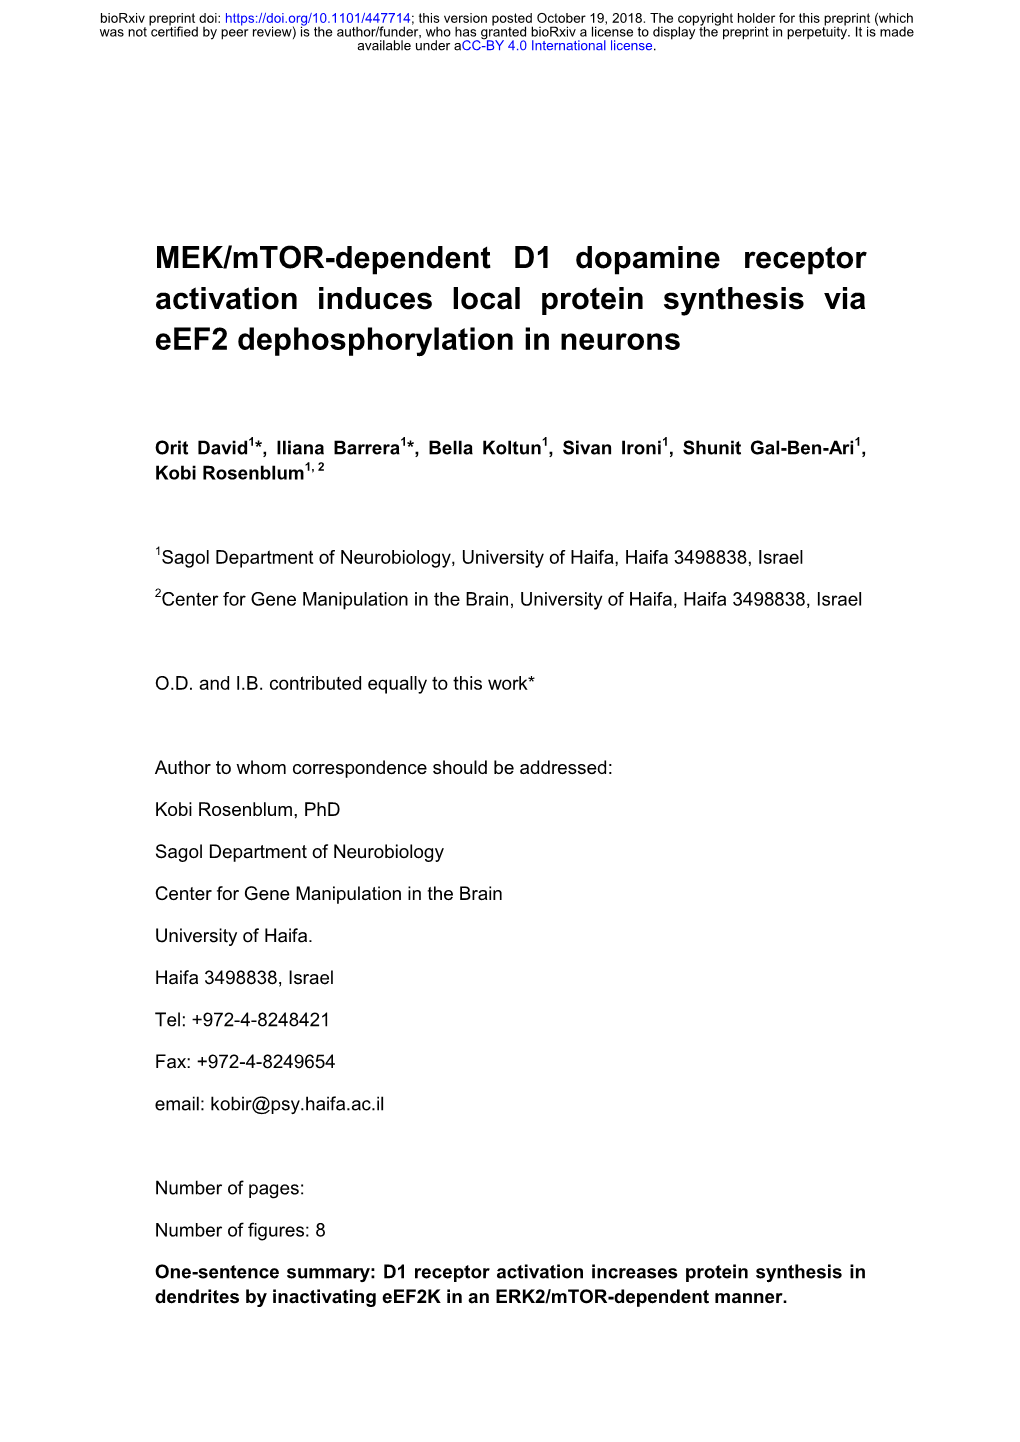 MEK/Mtor-Dependent D1 Dopamine Receptor Activation Induces Local Protein Synthesis Via Eef2 Dephosphorylation in Neurons